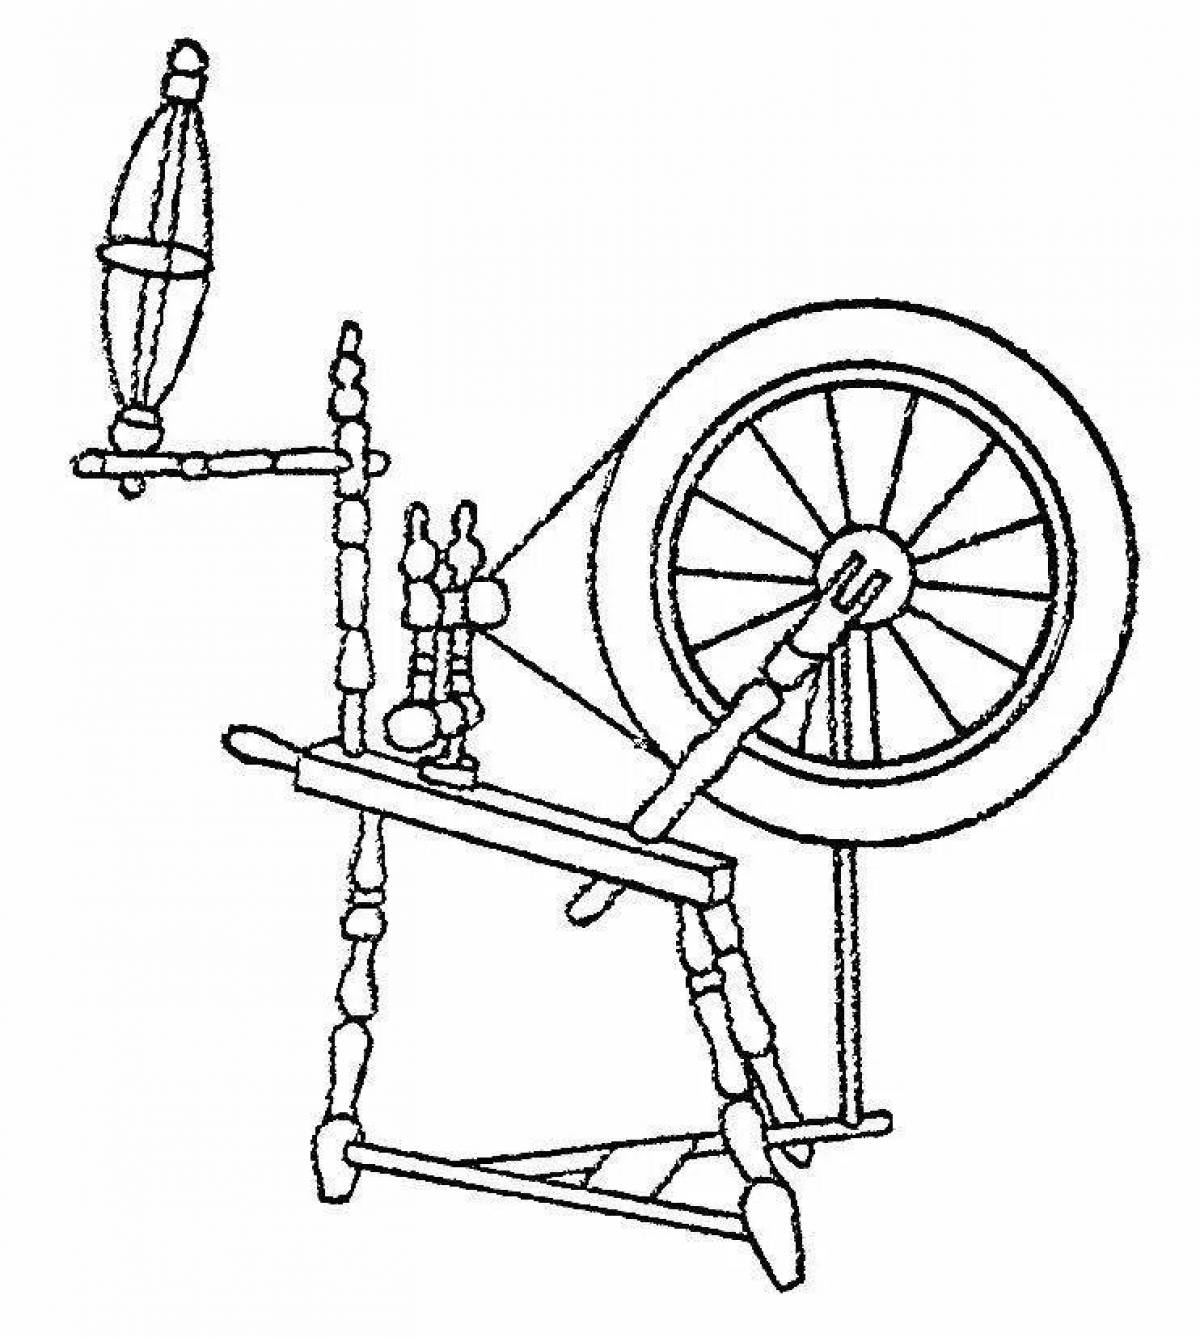 Spinning wheel #2